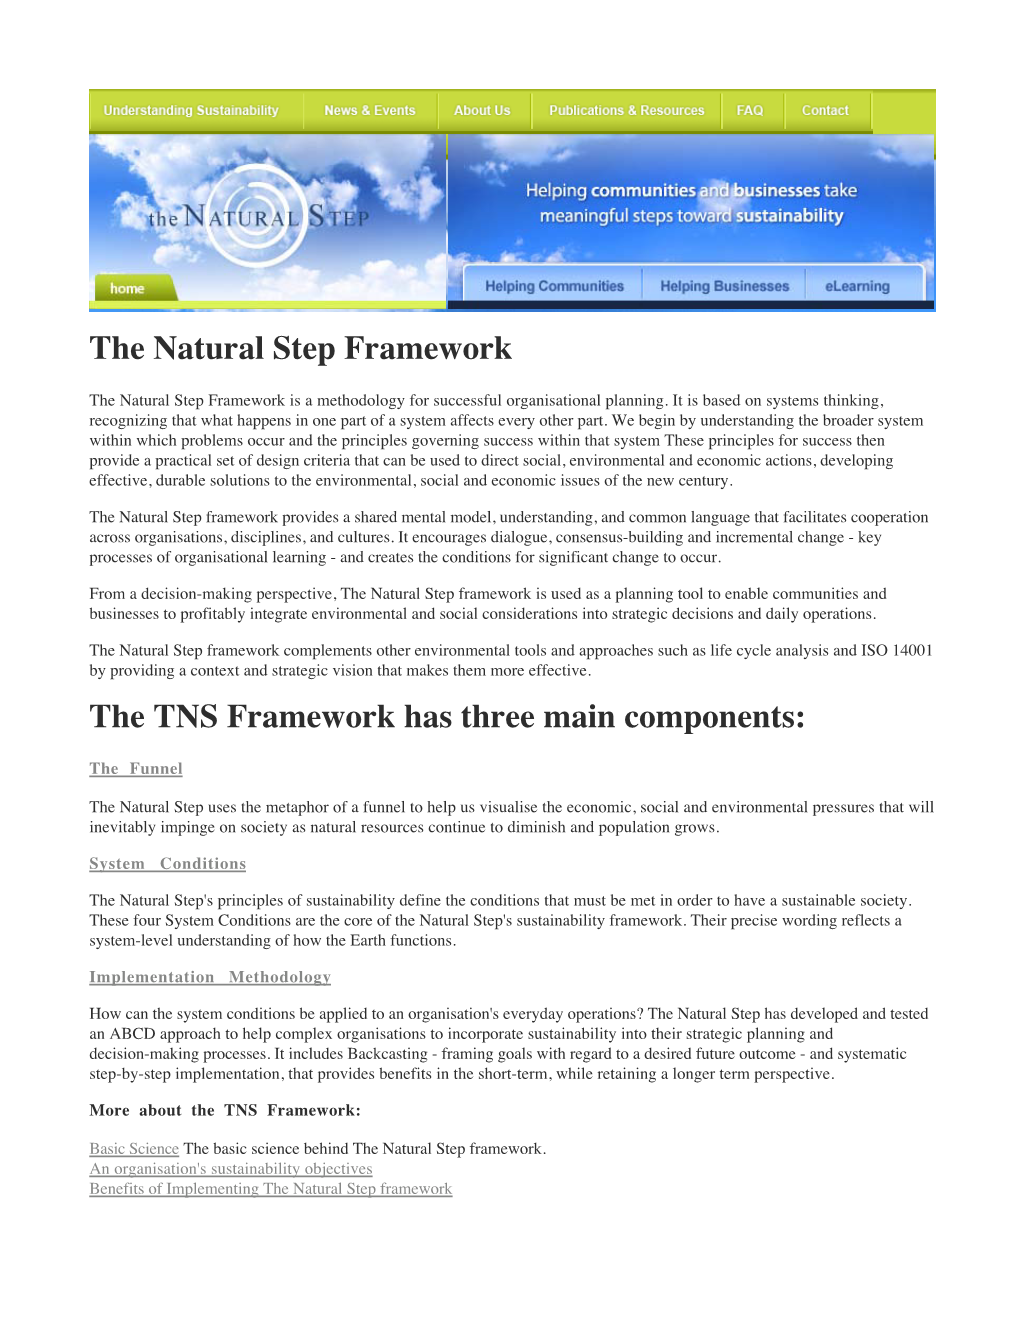 The Natural Step Framework the TNS Framework